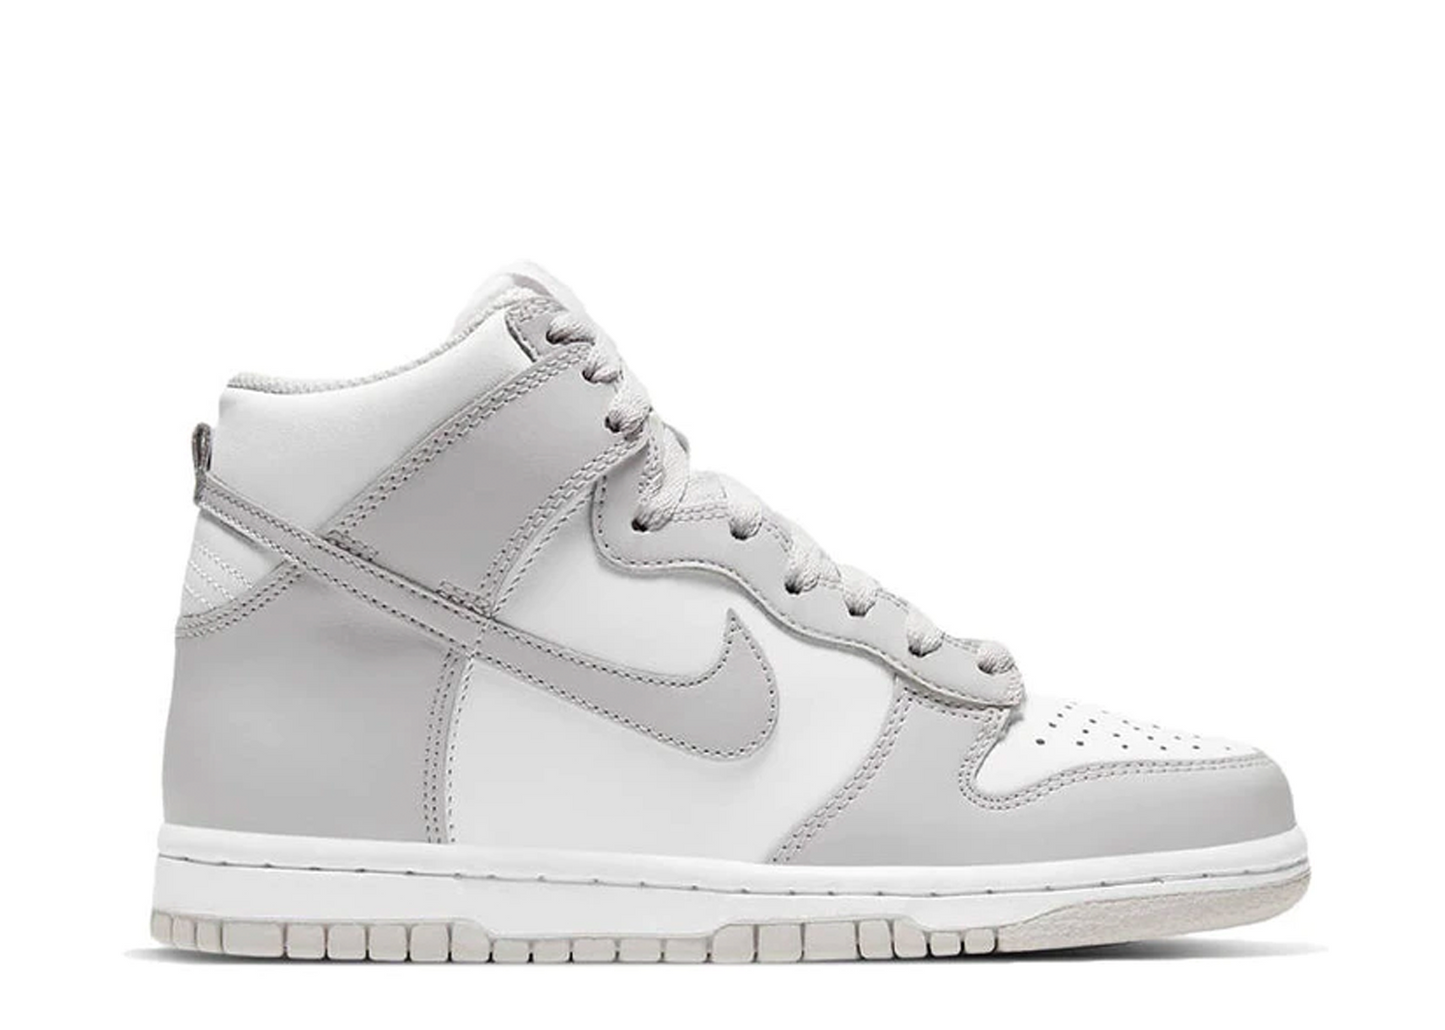 Nike Dunk High White Vast Grey (2021)